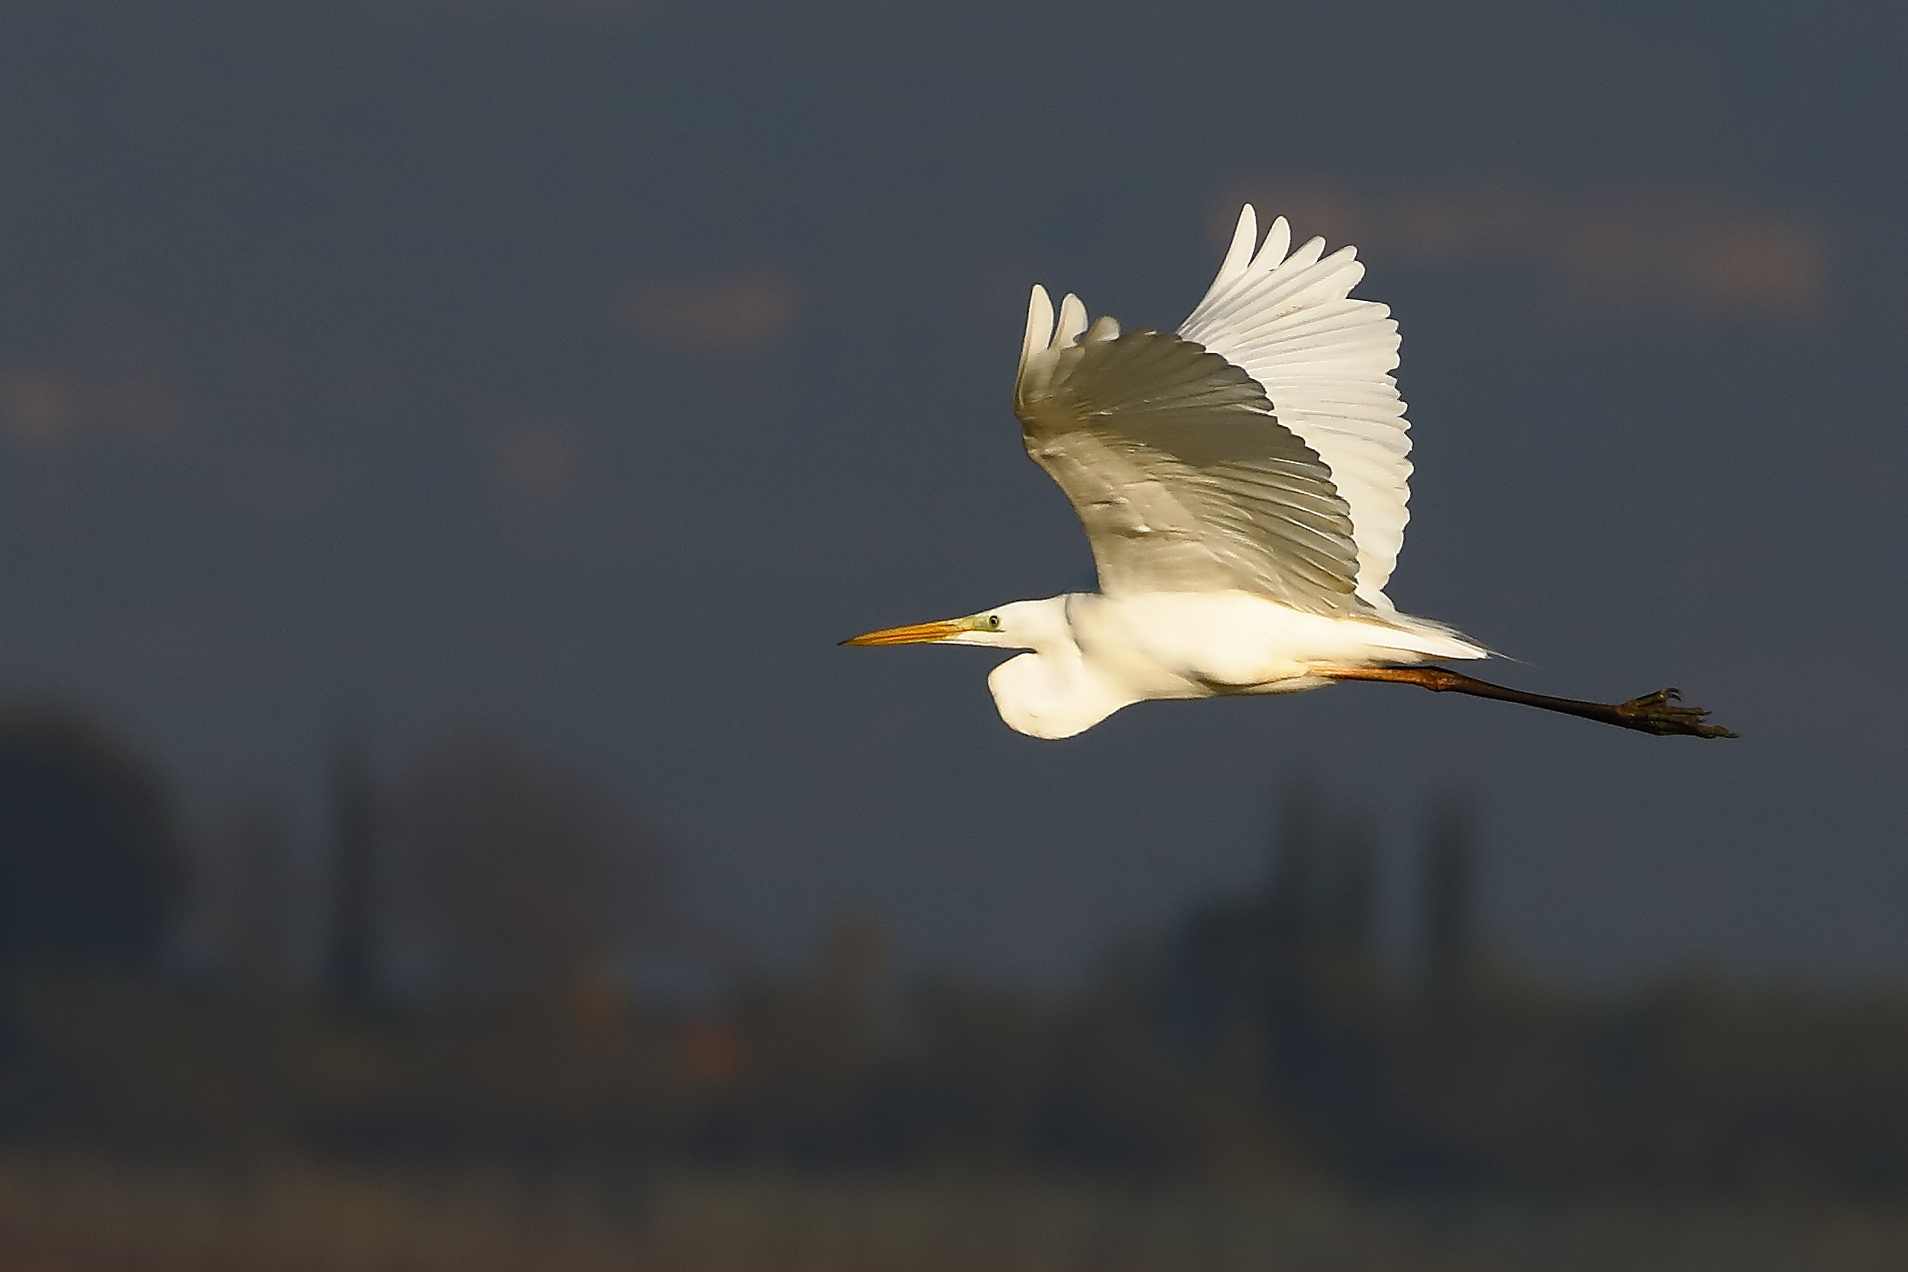 The elegant flight of the White Heron....